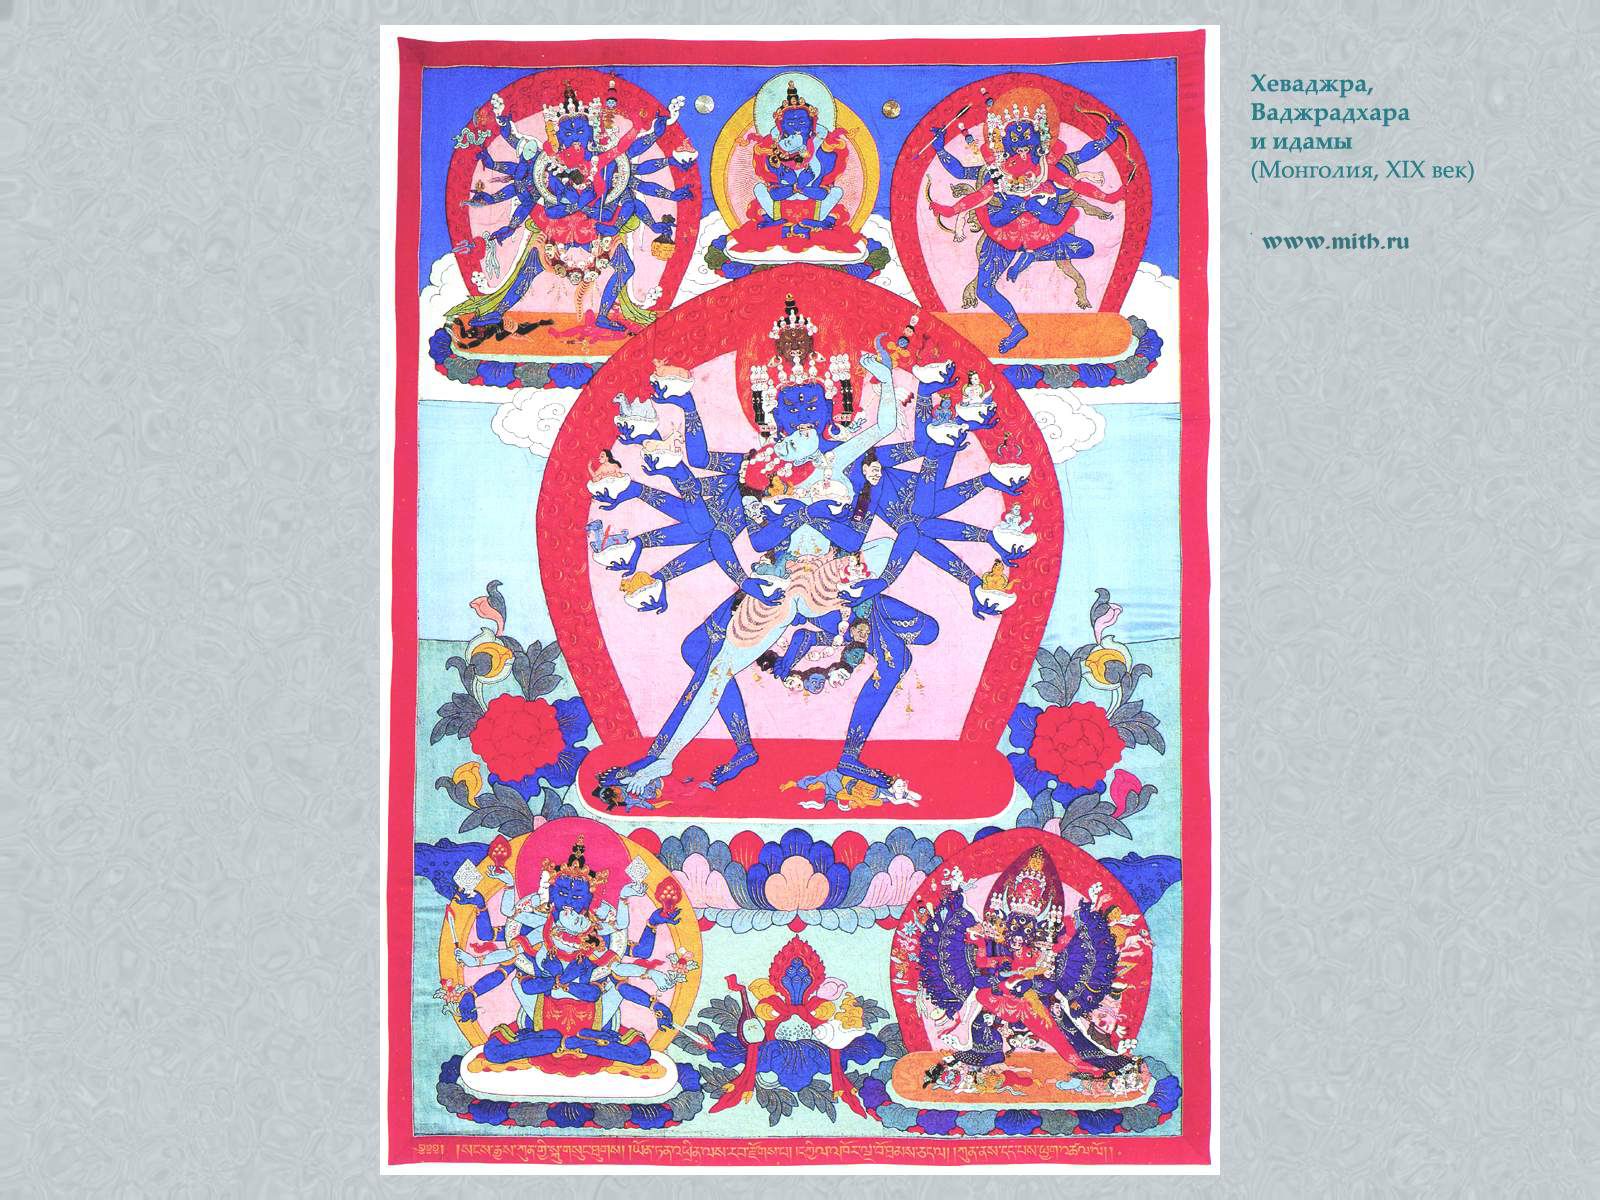 Ваджрадхара, идамы Хеваджра, Гухьясамаджа,
Калачакра, Самвара, Ямантака
яб-юм

перейти к книге 'Тибетская живопись'